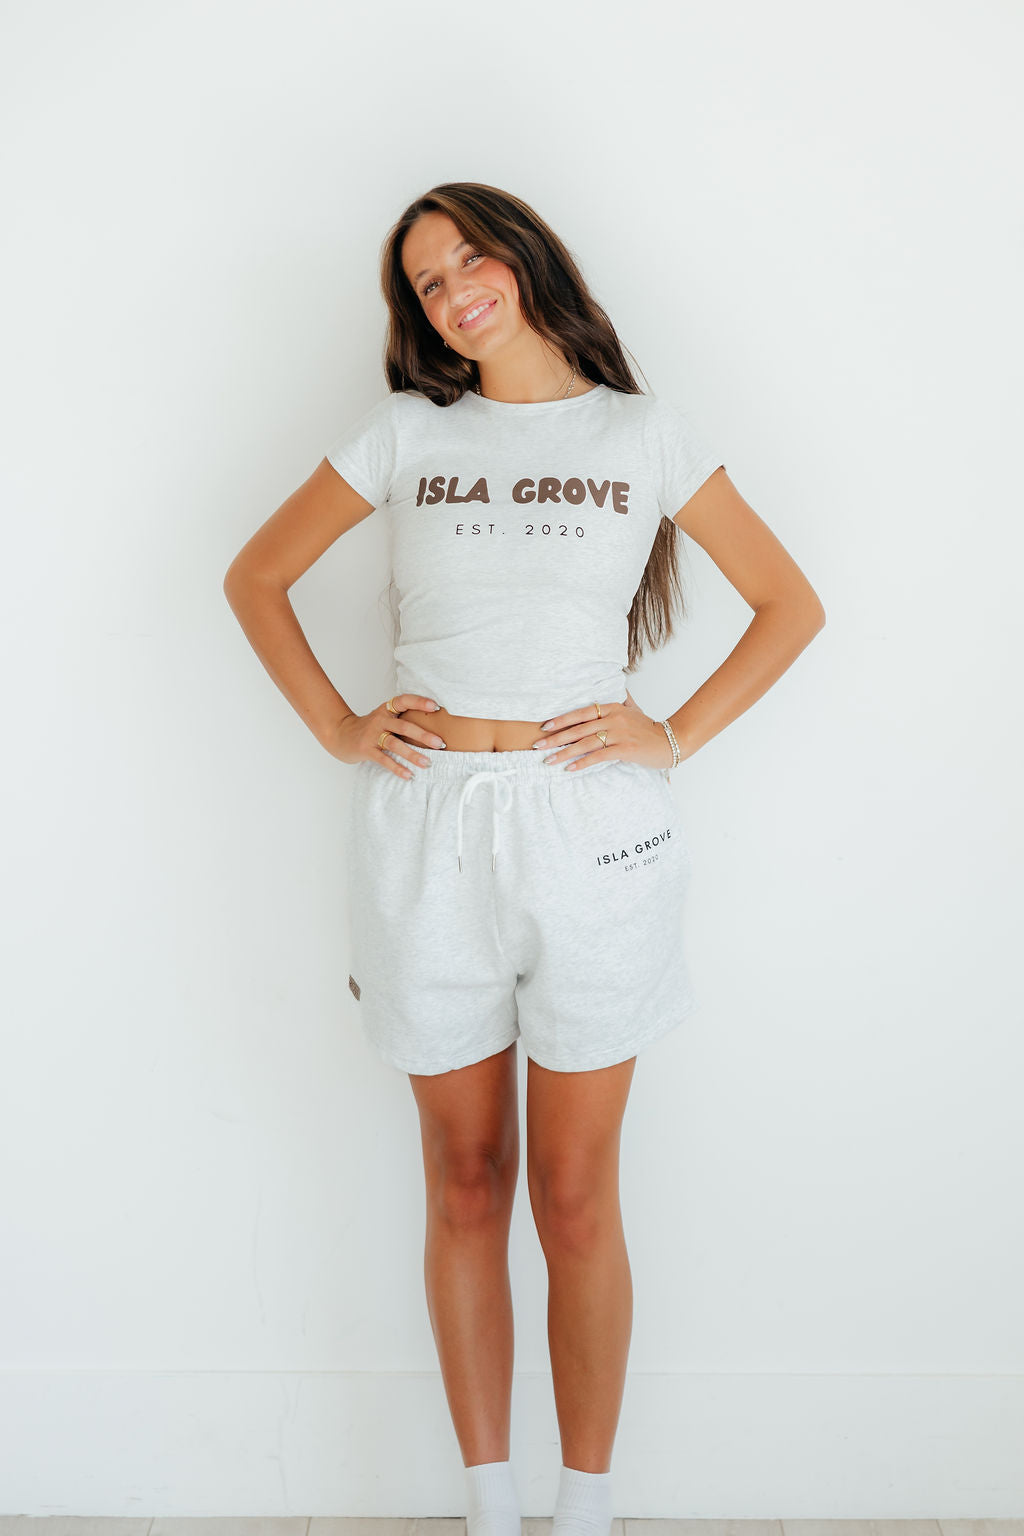 Isla Grove Original Baby Tee // Ash